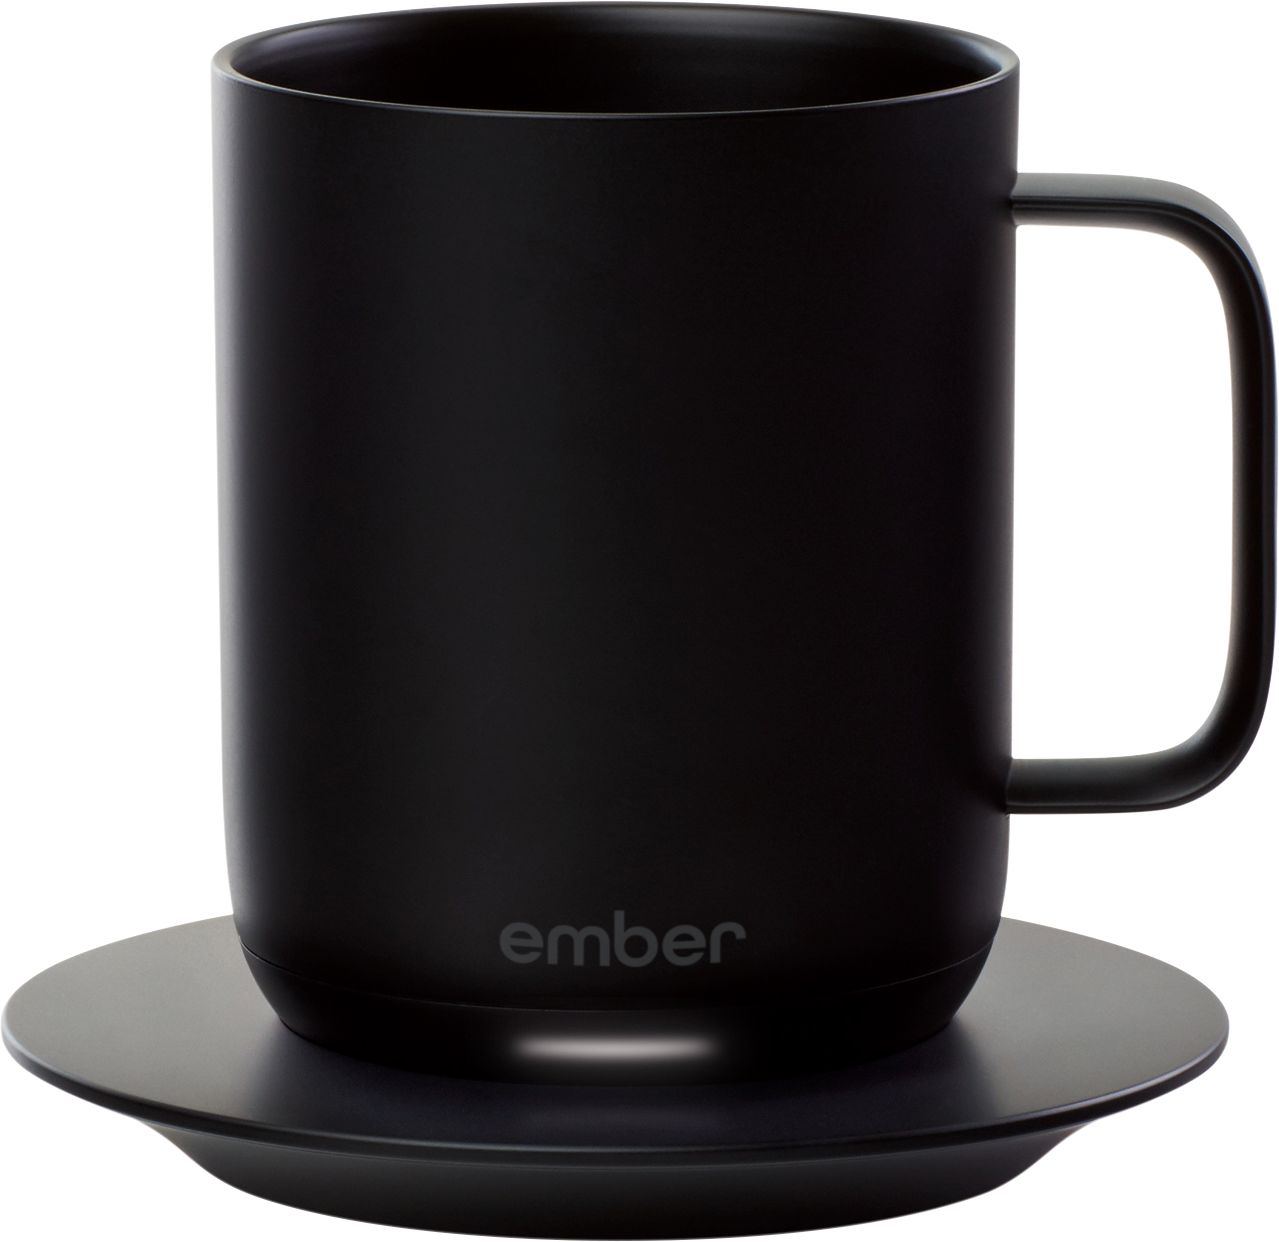 Ember Temperature Controlled Ceramic Mug